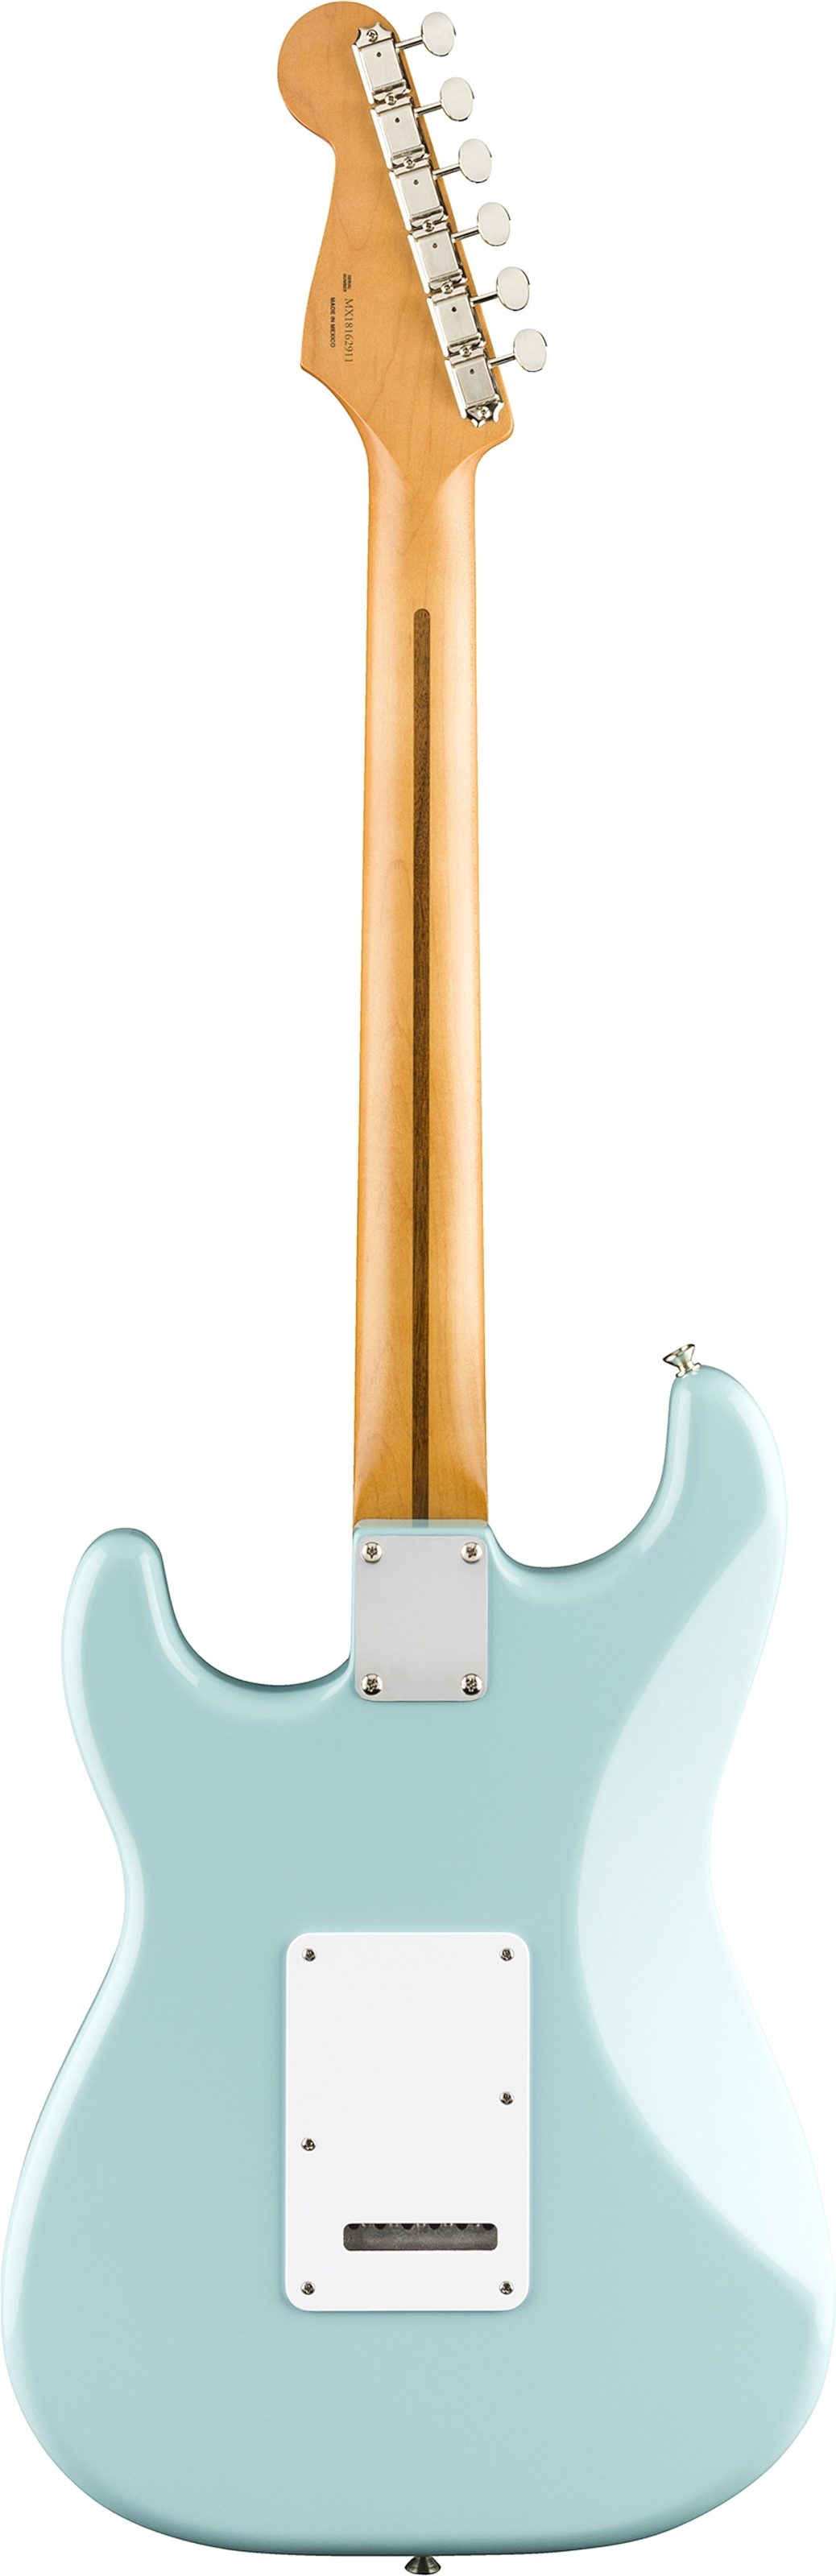 Fender Vintera '50s Modified Stratocaster Electric Guitar, Maple